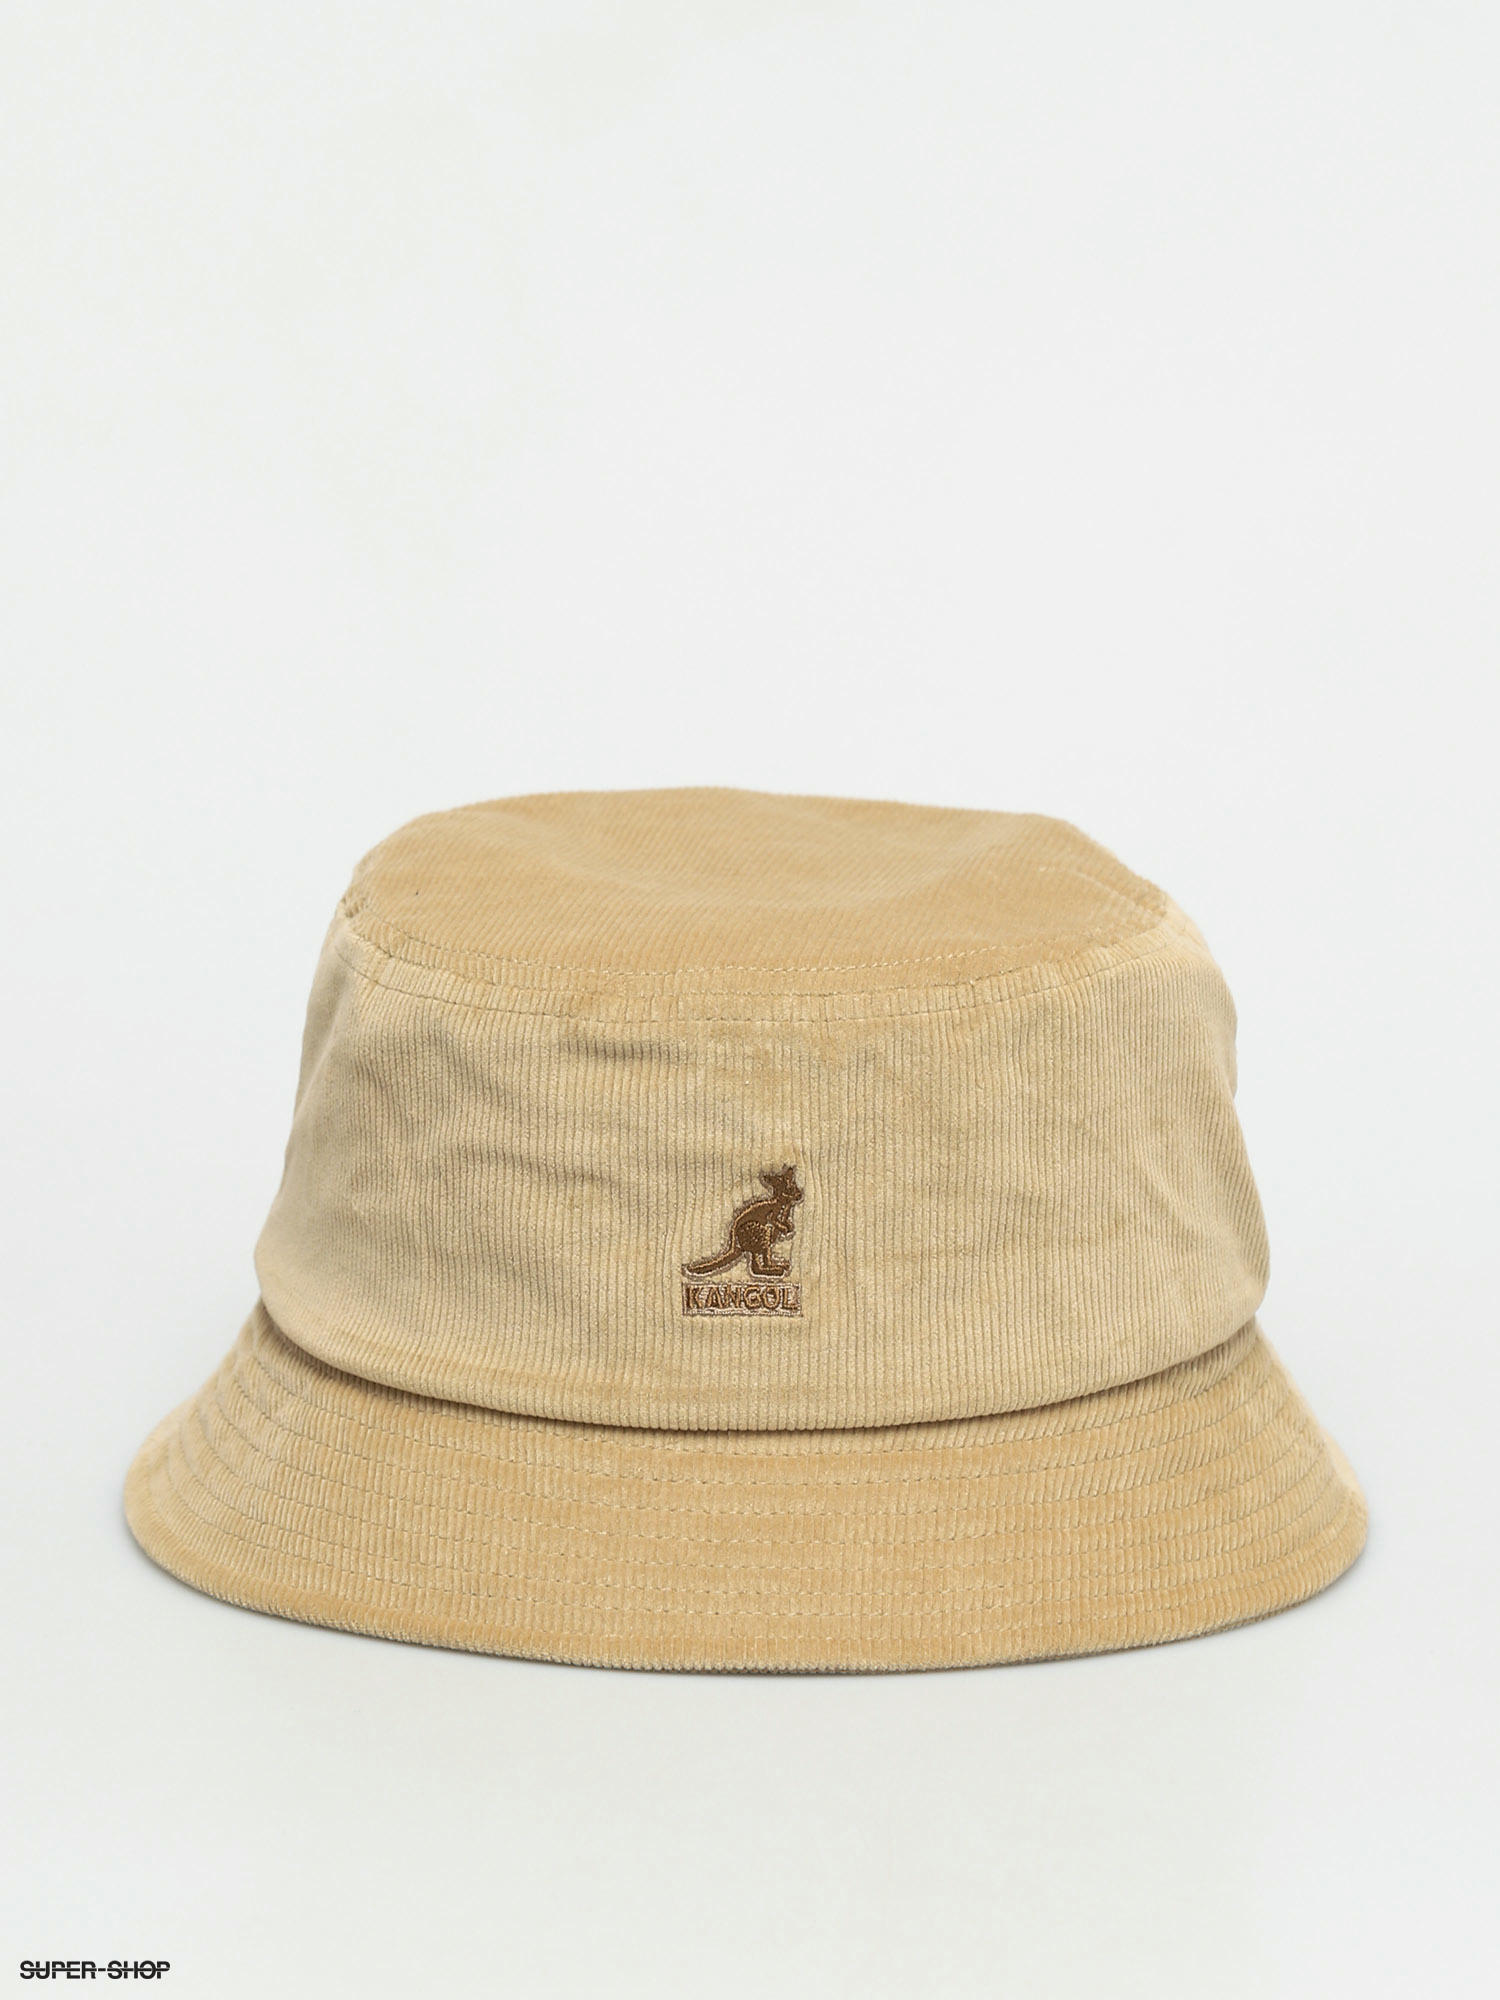 Distressed Cotton Mesh Bucket Cloth Hat by Kangol